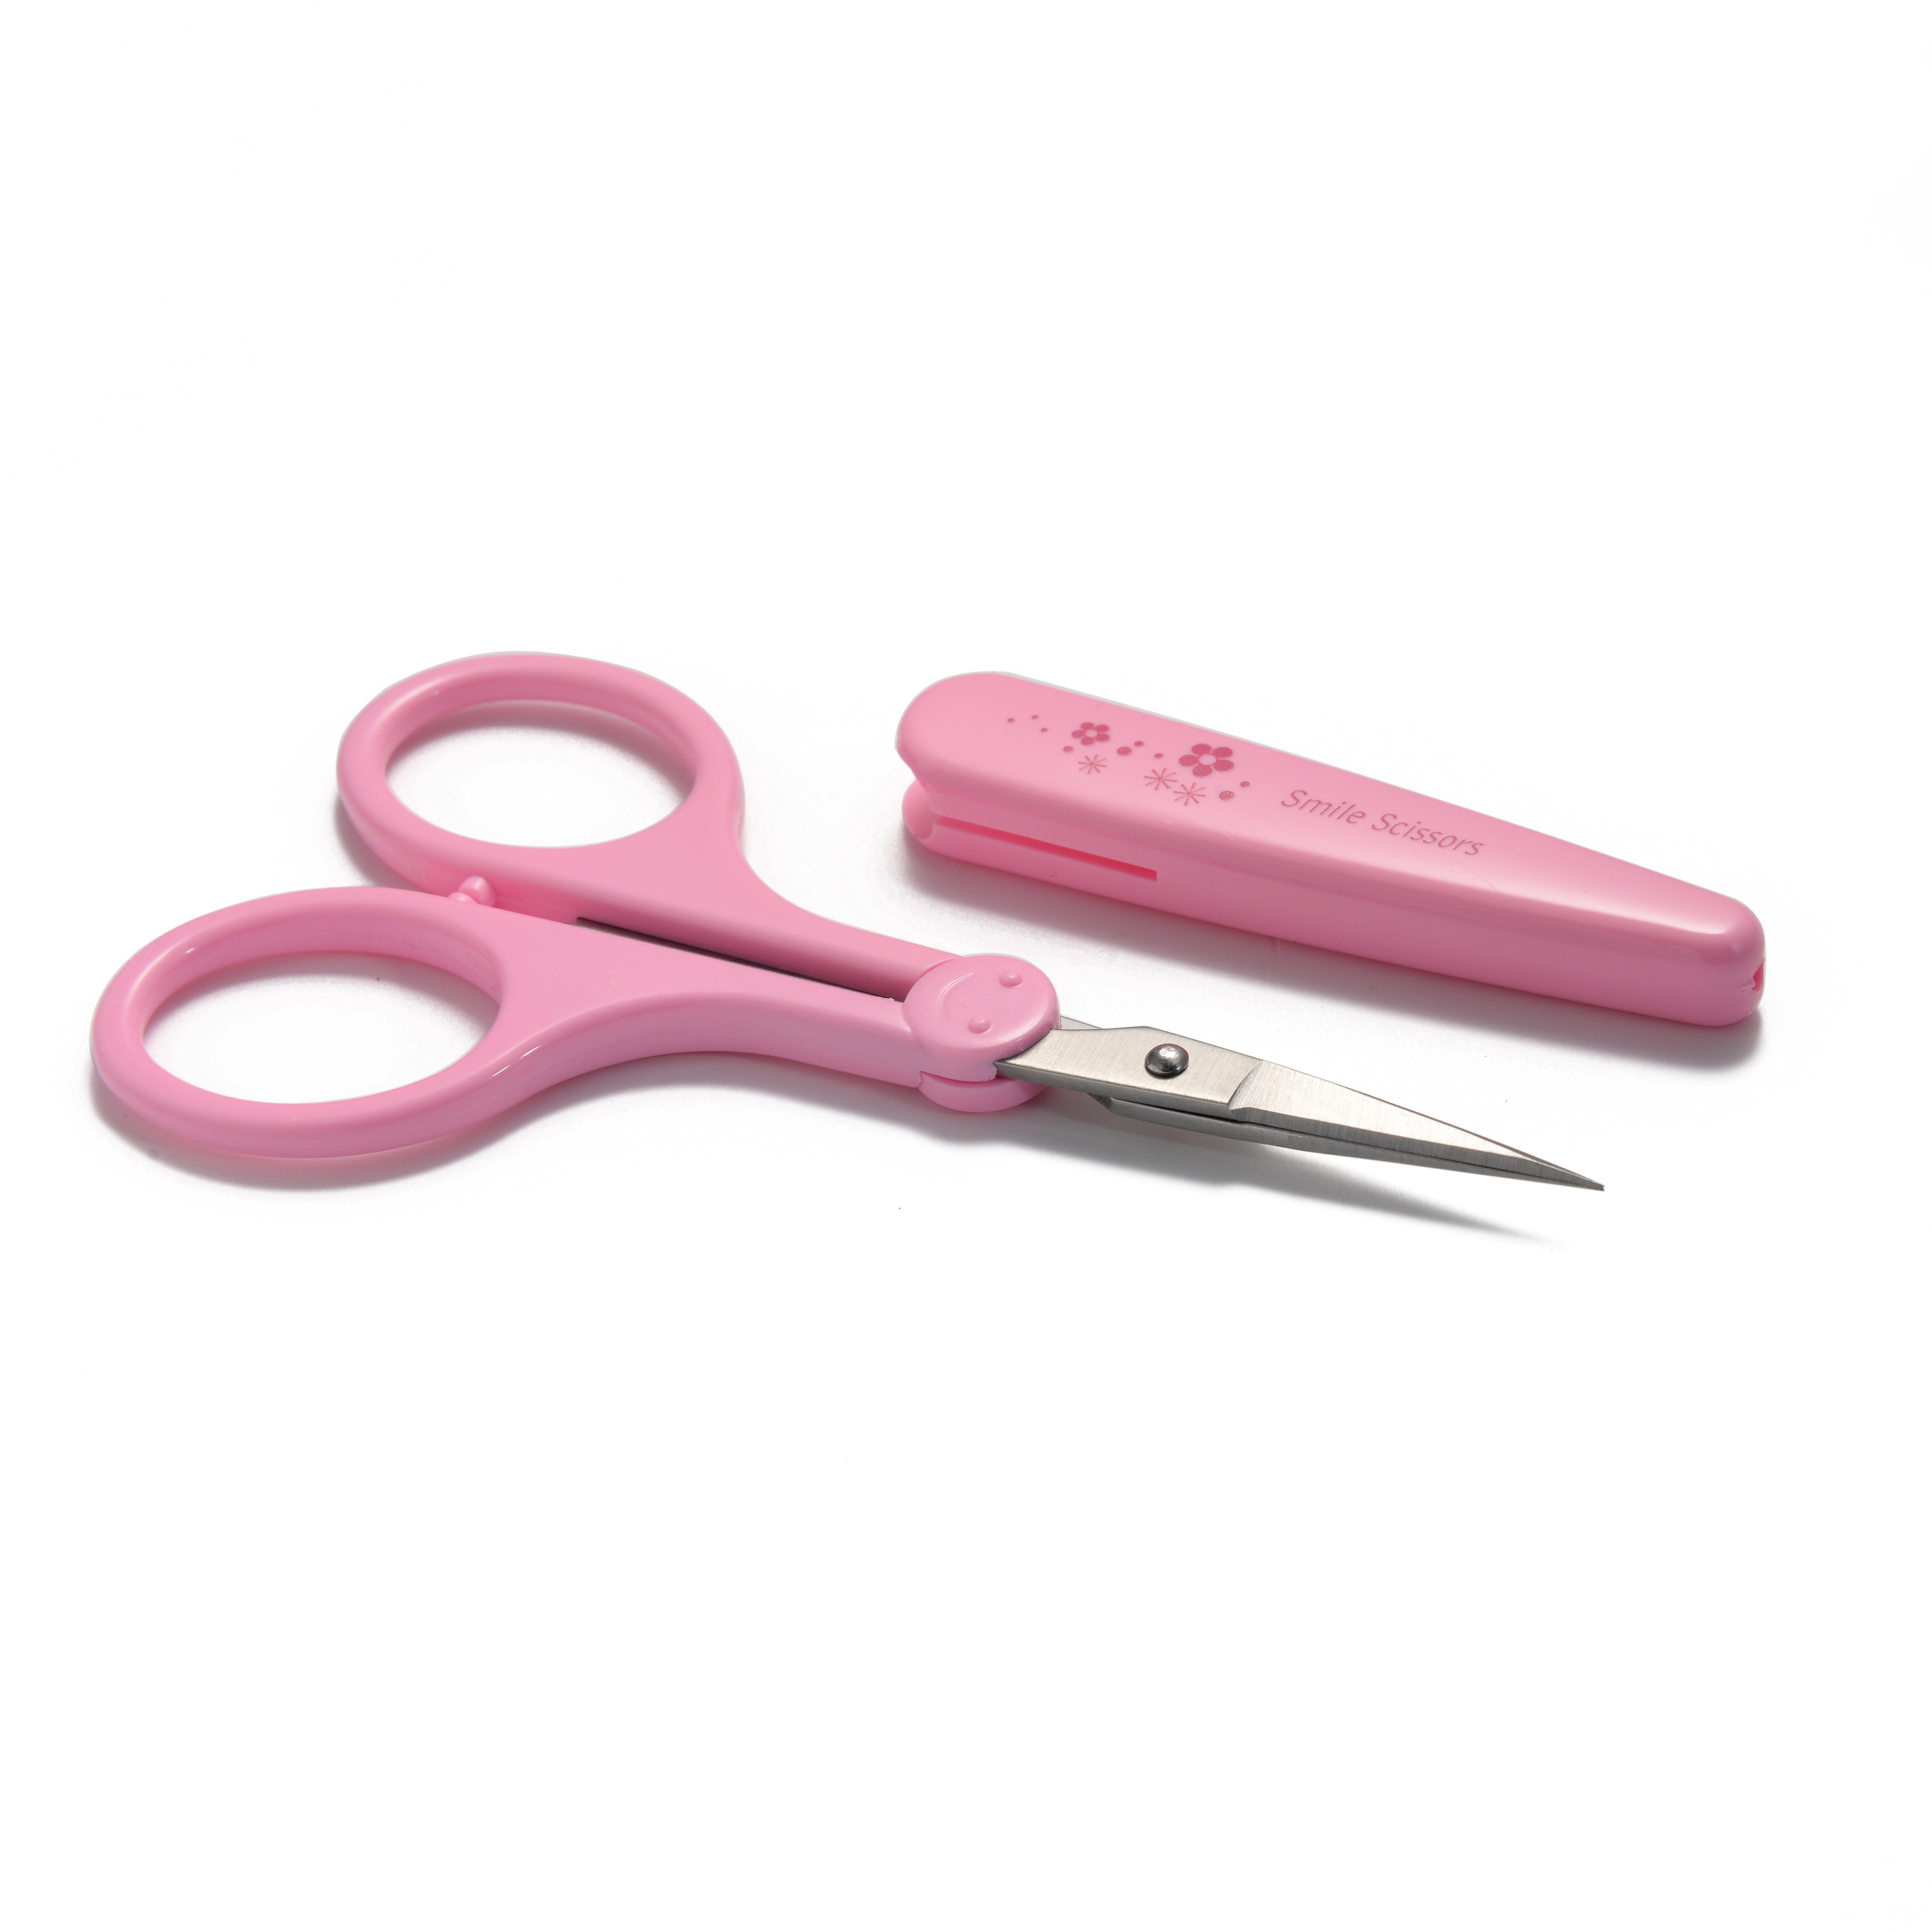 Scissors All Purpose Craft Scissors, Light Pink Multipurpose Fabric  Scissors Sewing Scissors Sharp Scissors for Office (Light Pink)